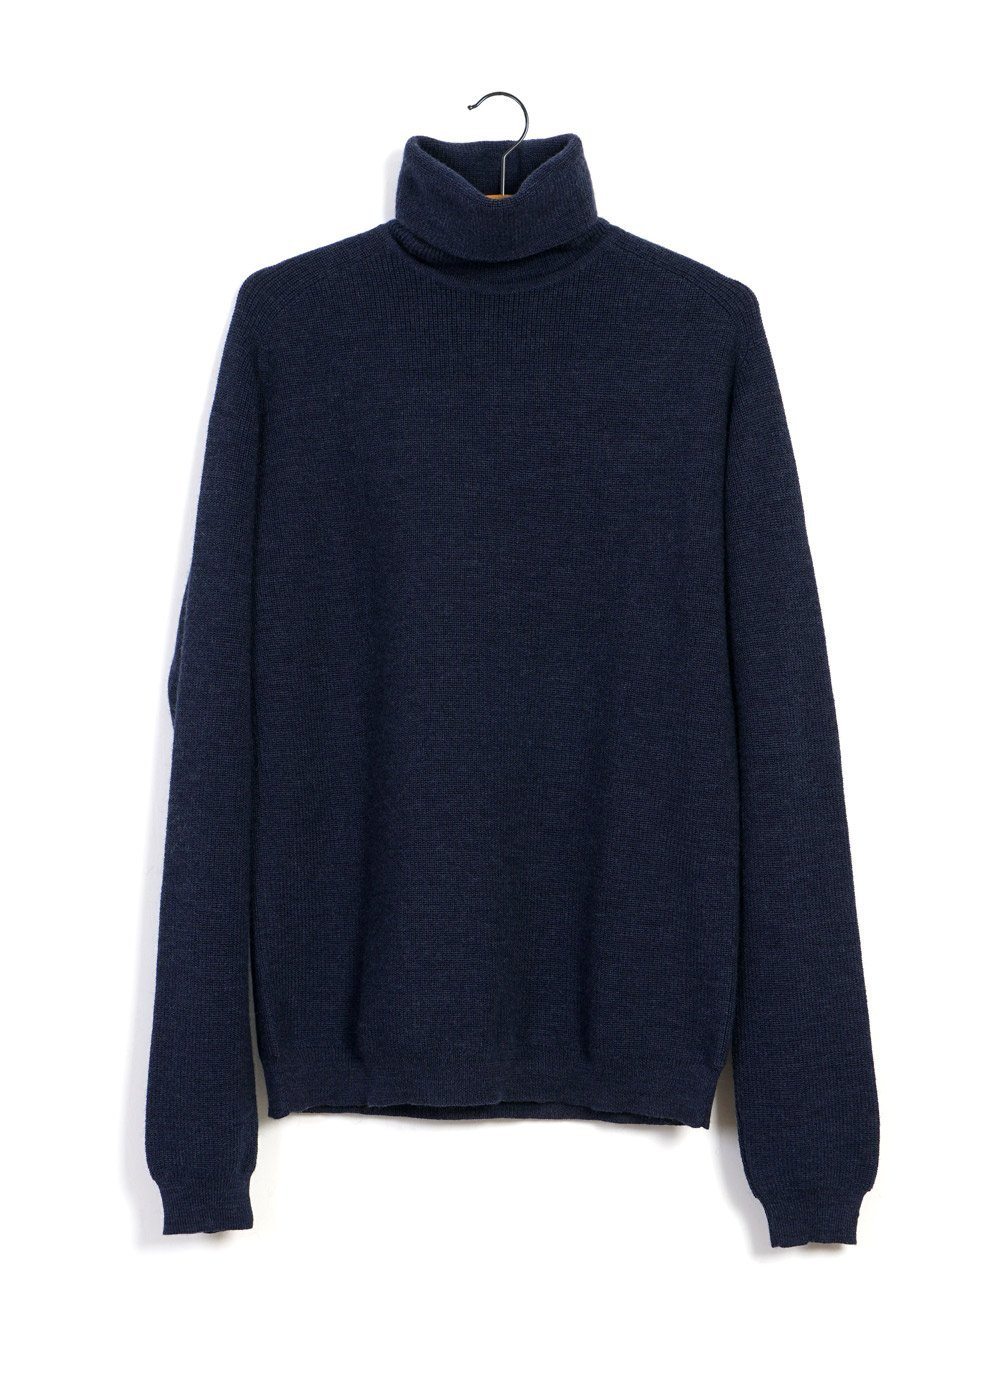 HANSEN Garments - PATRICK | Knitted Turtleneck Sweater | Bluemele - HANSEN Garments